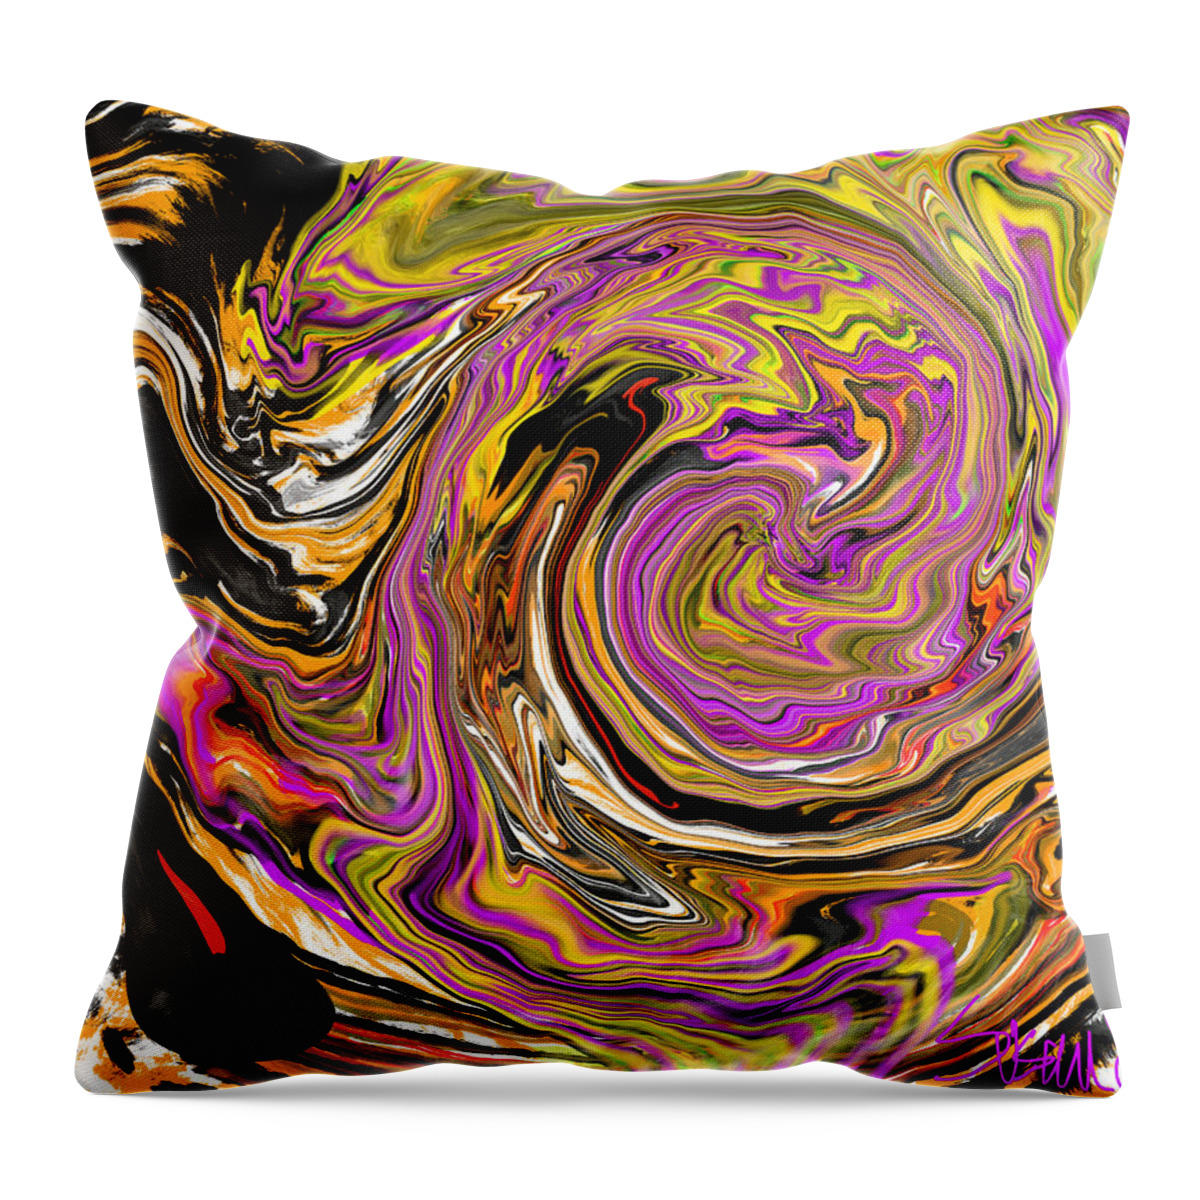  Throw Pillow featuring the digital art Jitterybug by Susan Fielder